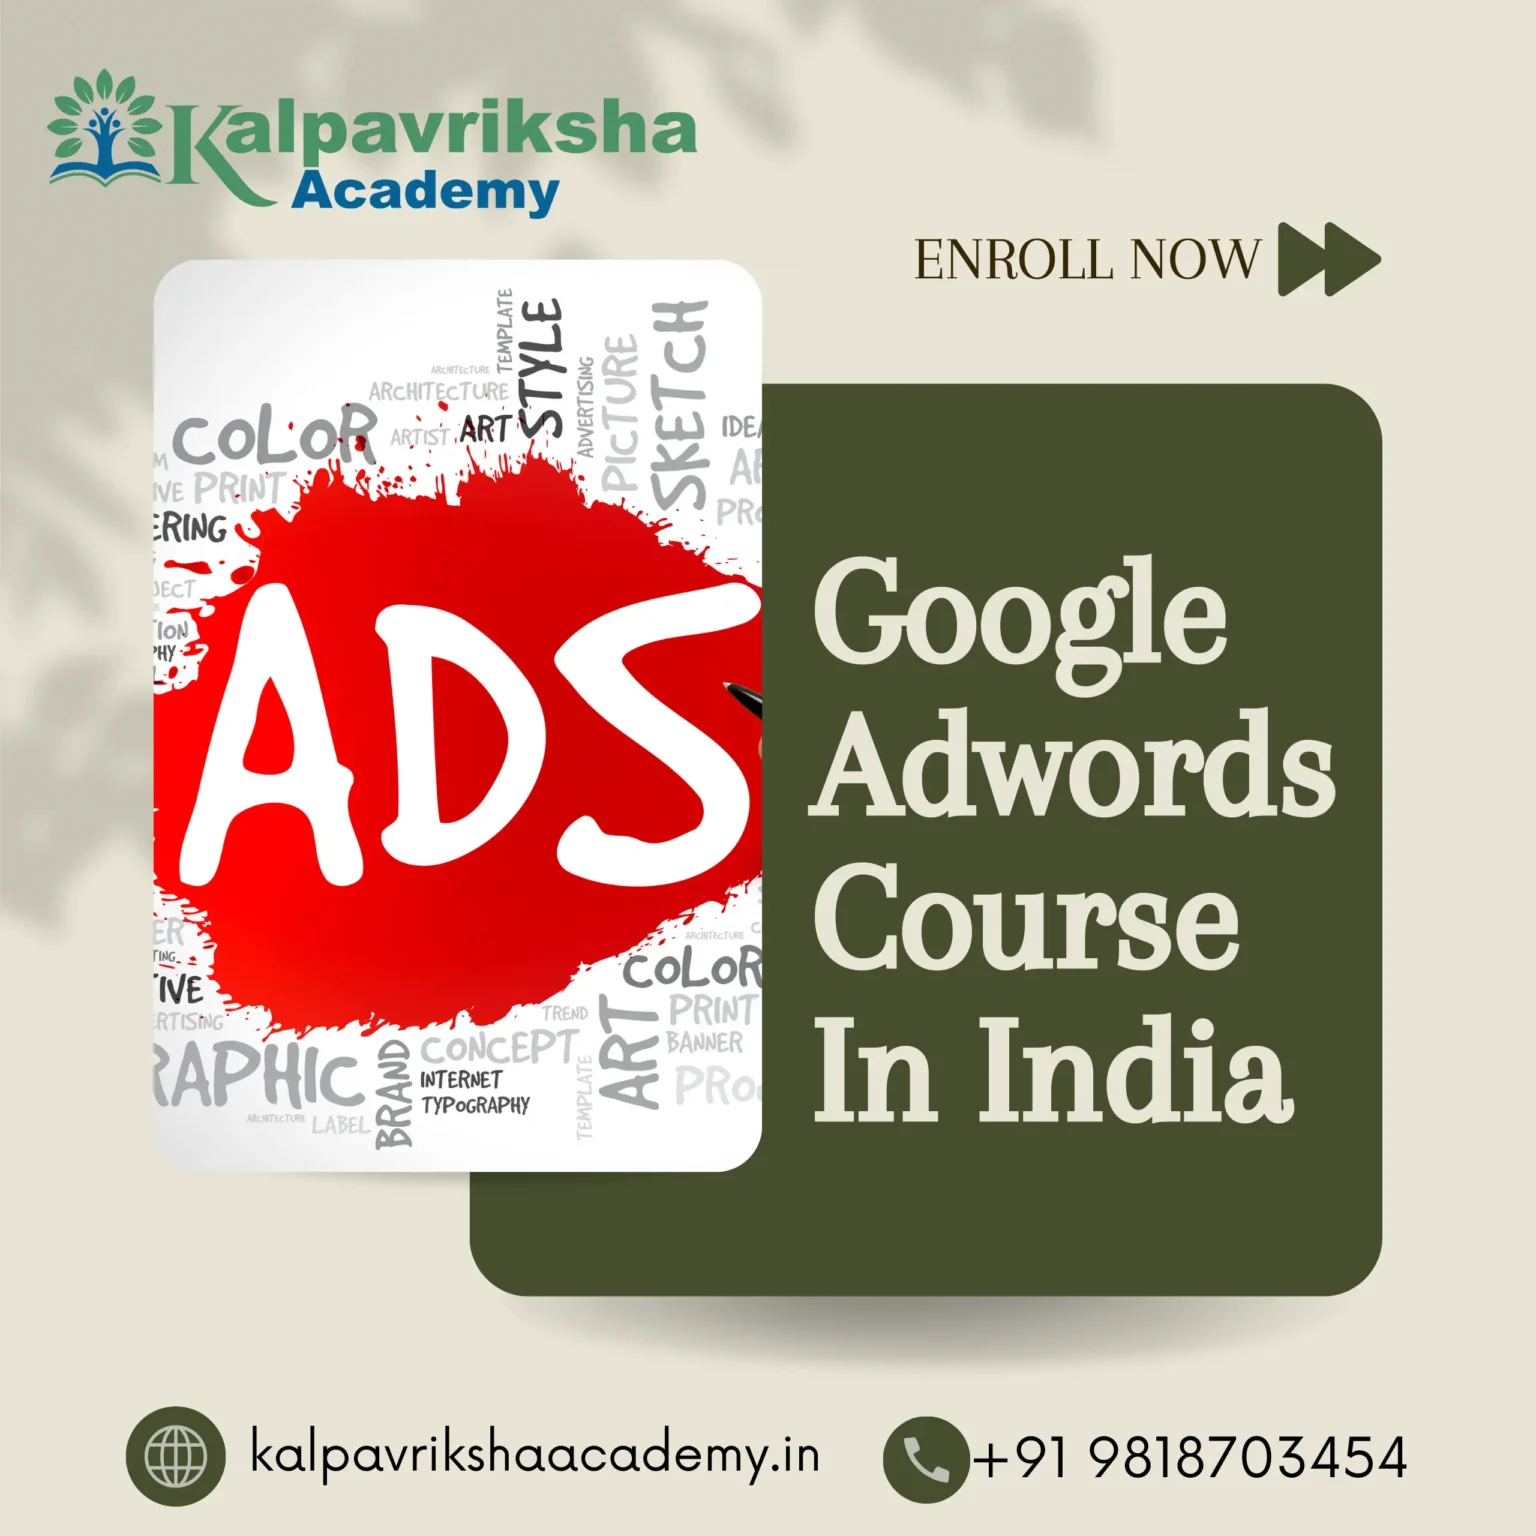 Google Adwords Course In India - Kalpavriksha Academy